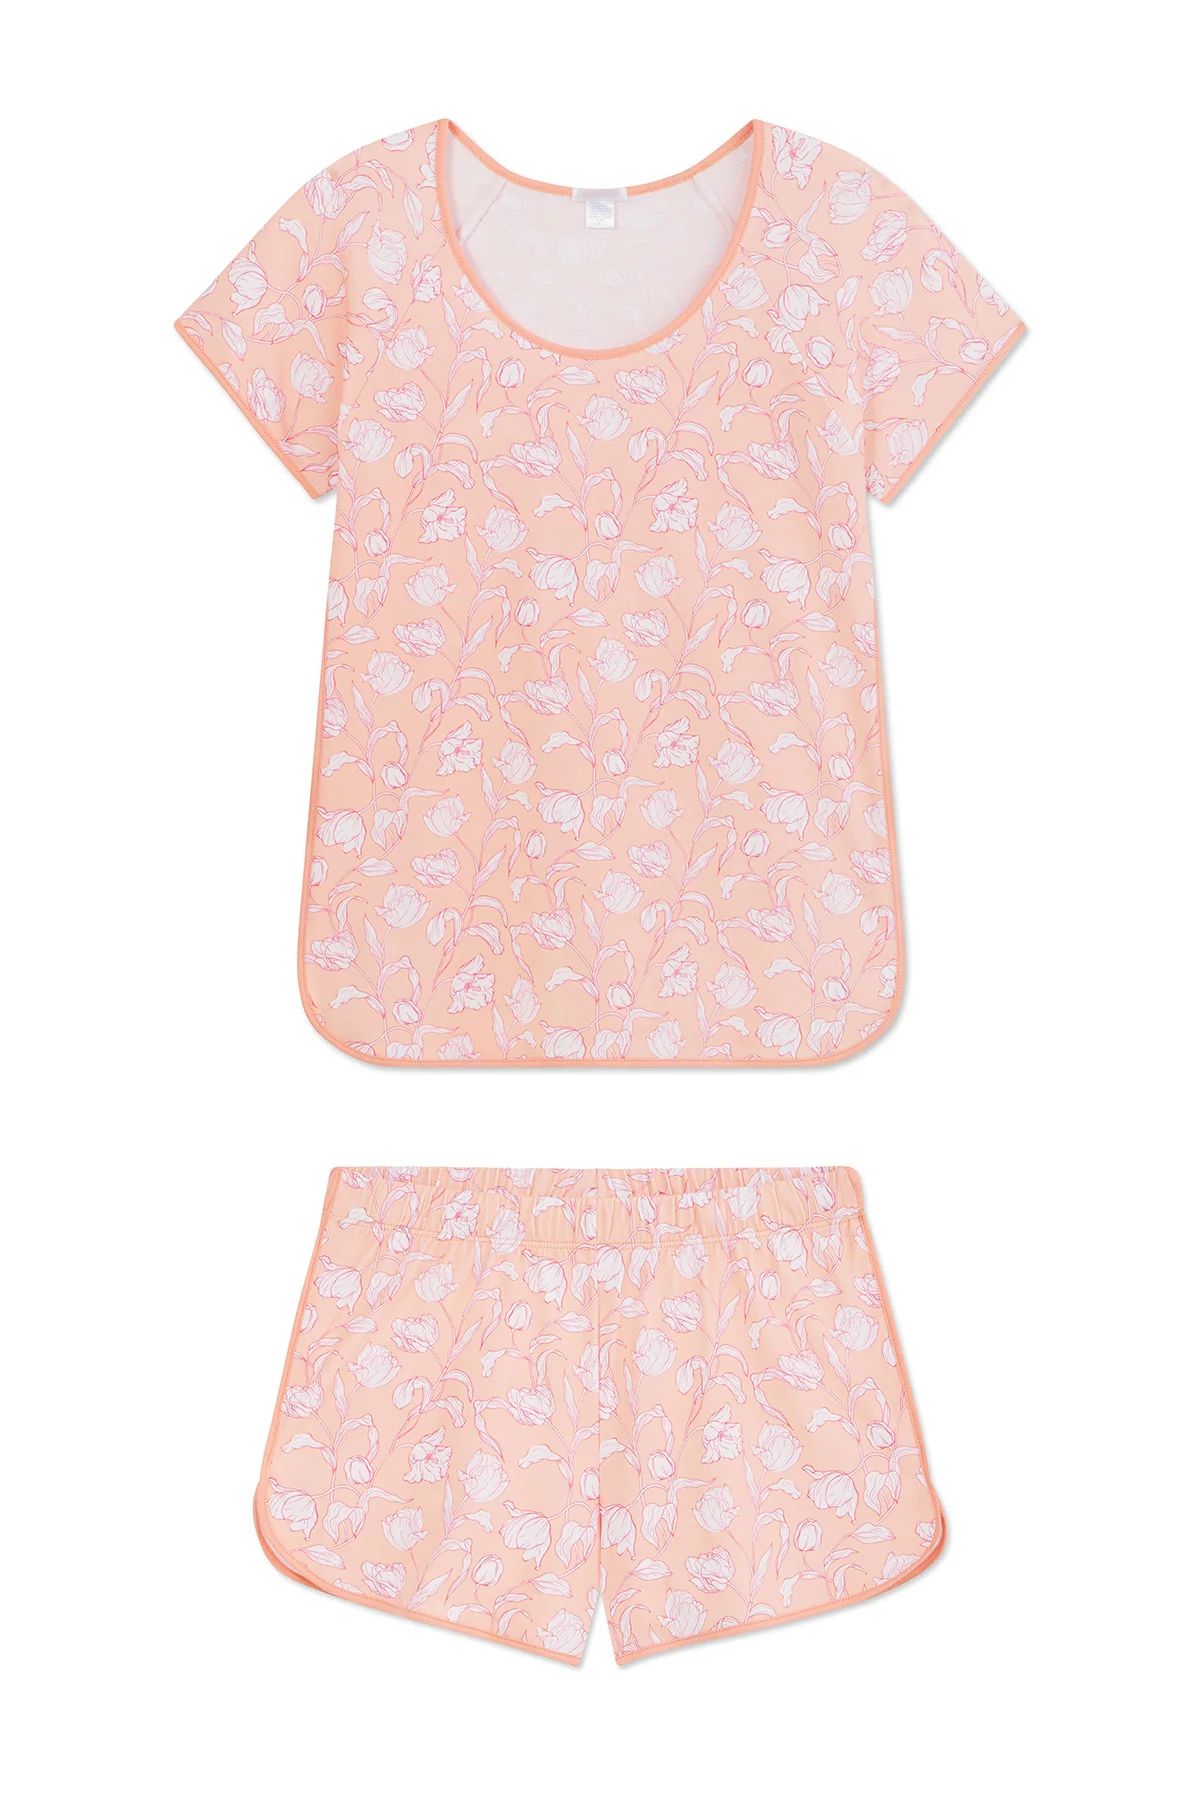 Pima Shorts Set in Apricot Vine Floral | Lake Pajamas